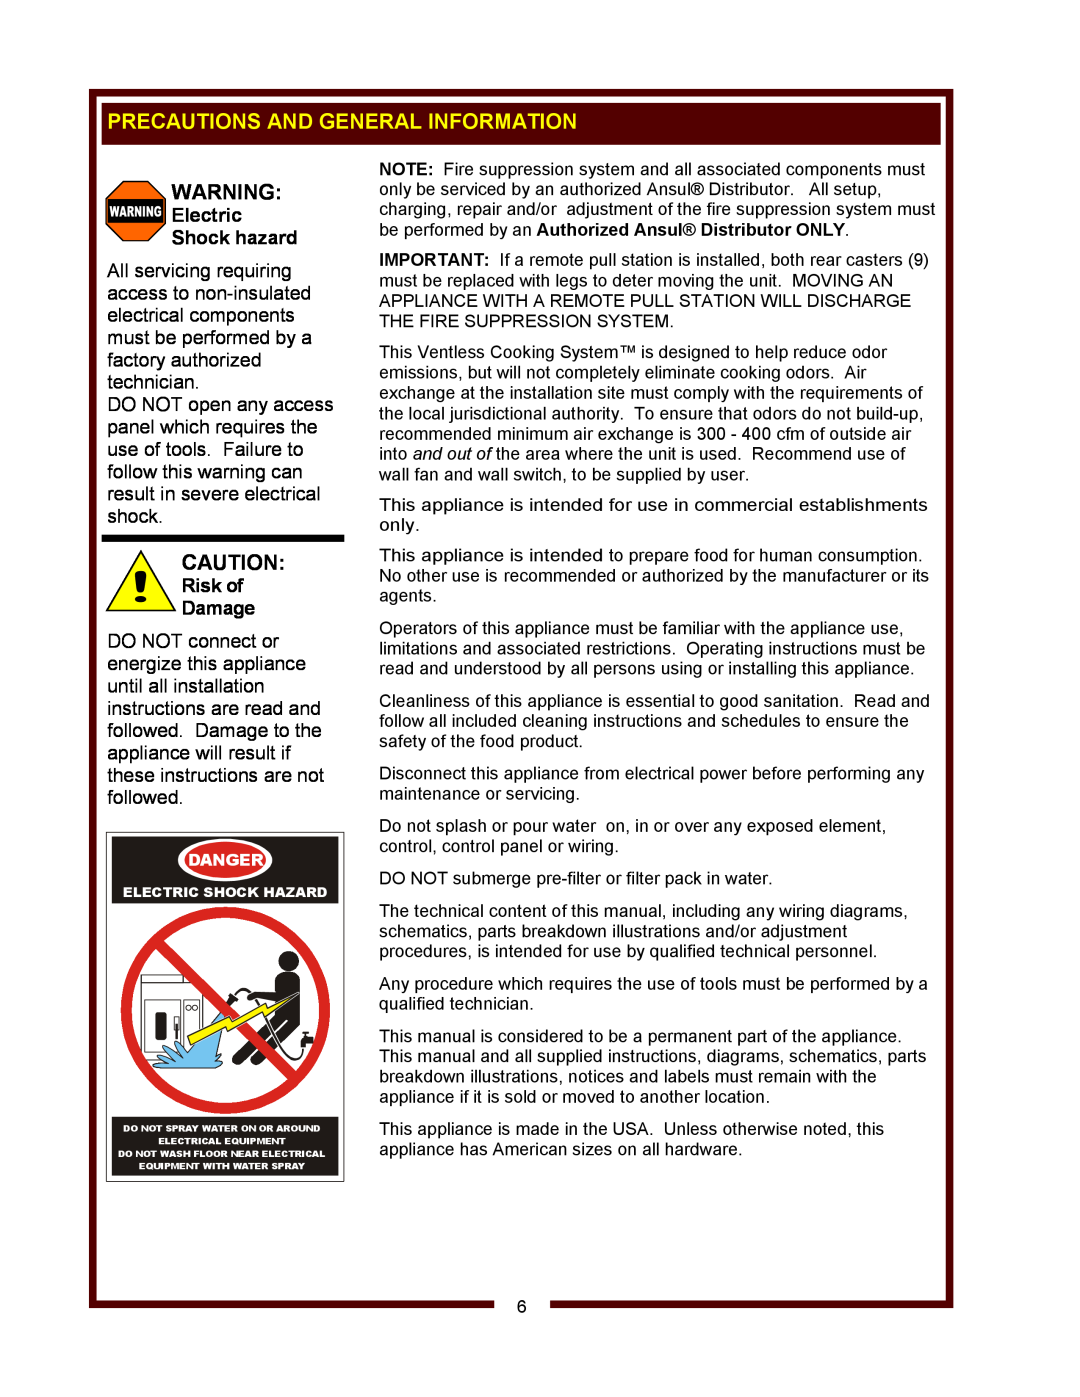 Wells WVOC-4HF, WVOC-4HS, WVOC-4HC Precautions And General Information, Electric Shock hazard, Risk of Damage 